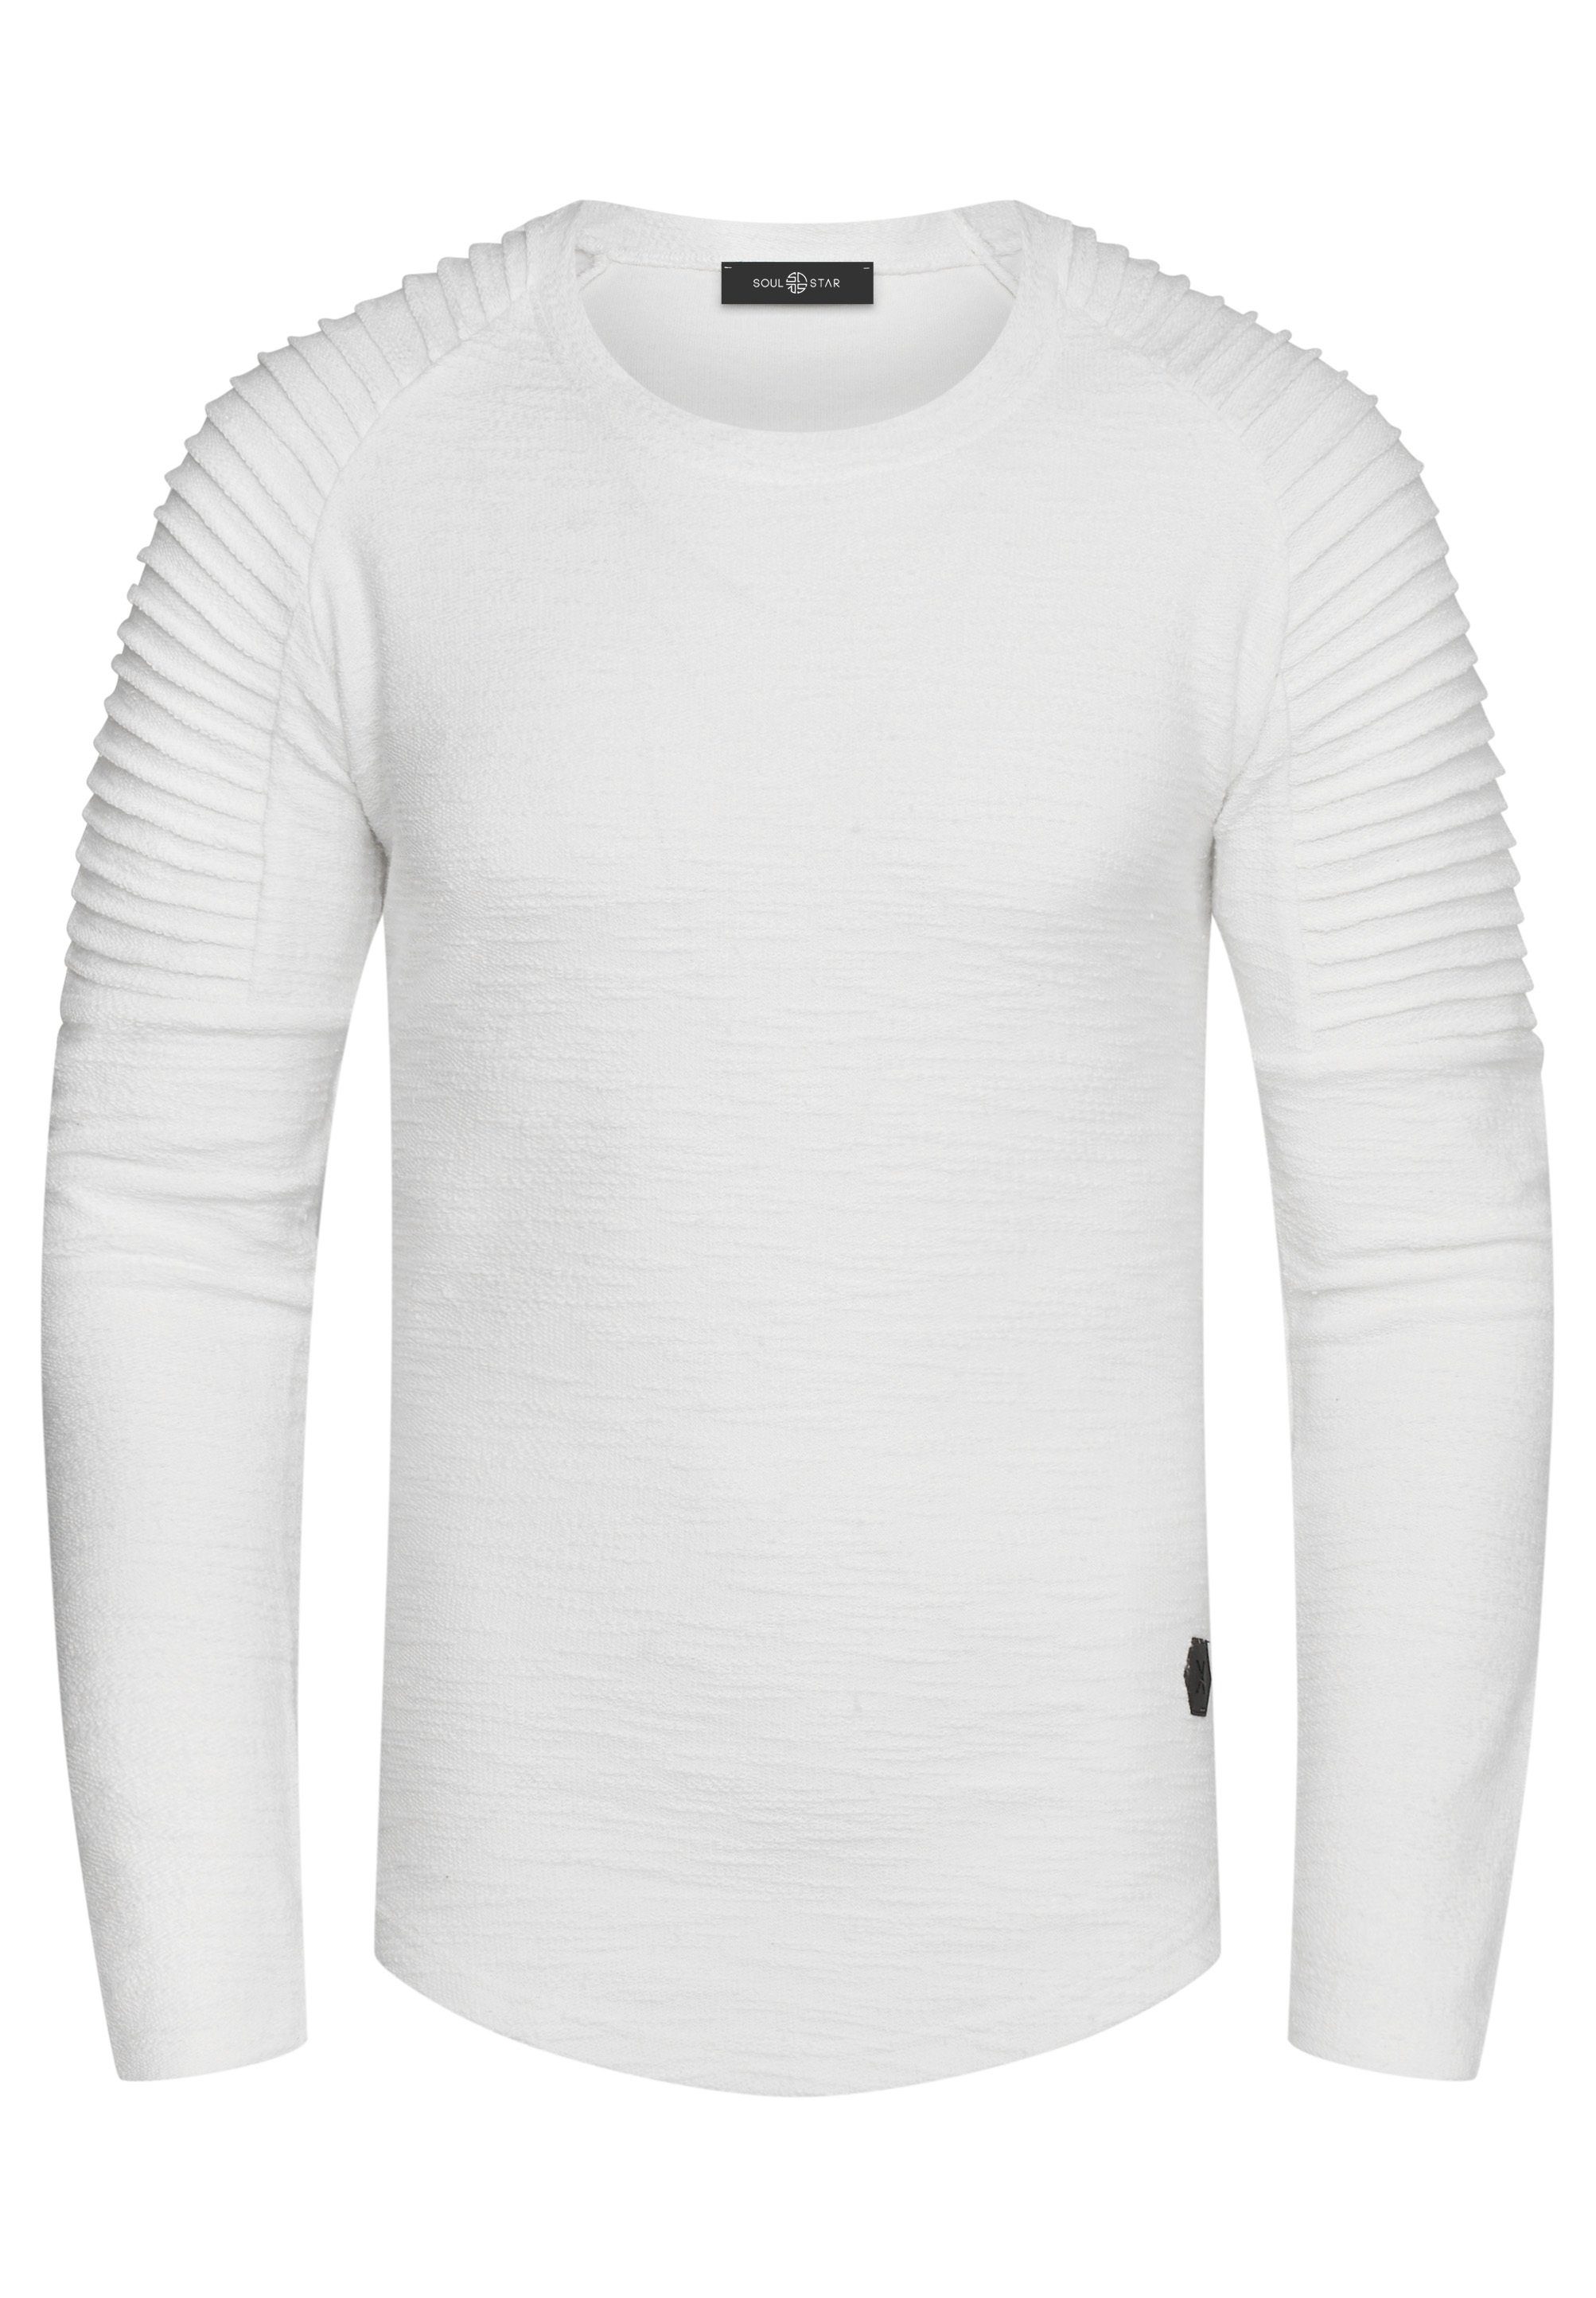 SOULSTAR Biker-Steppung Sweatshirt S2KAUAI mit Weiß